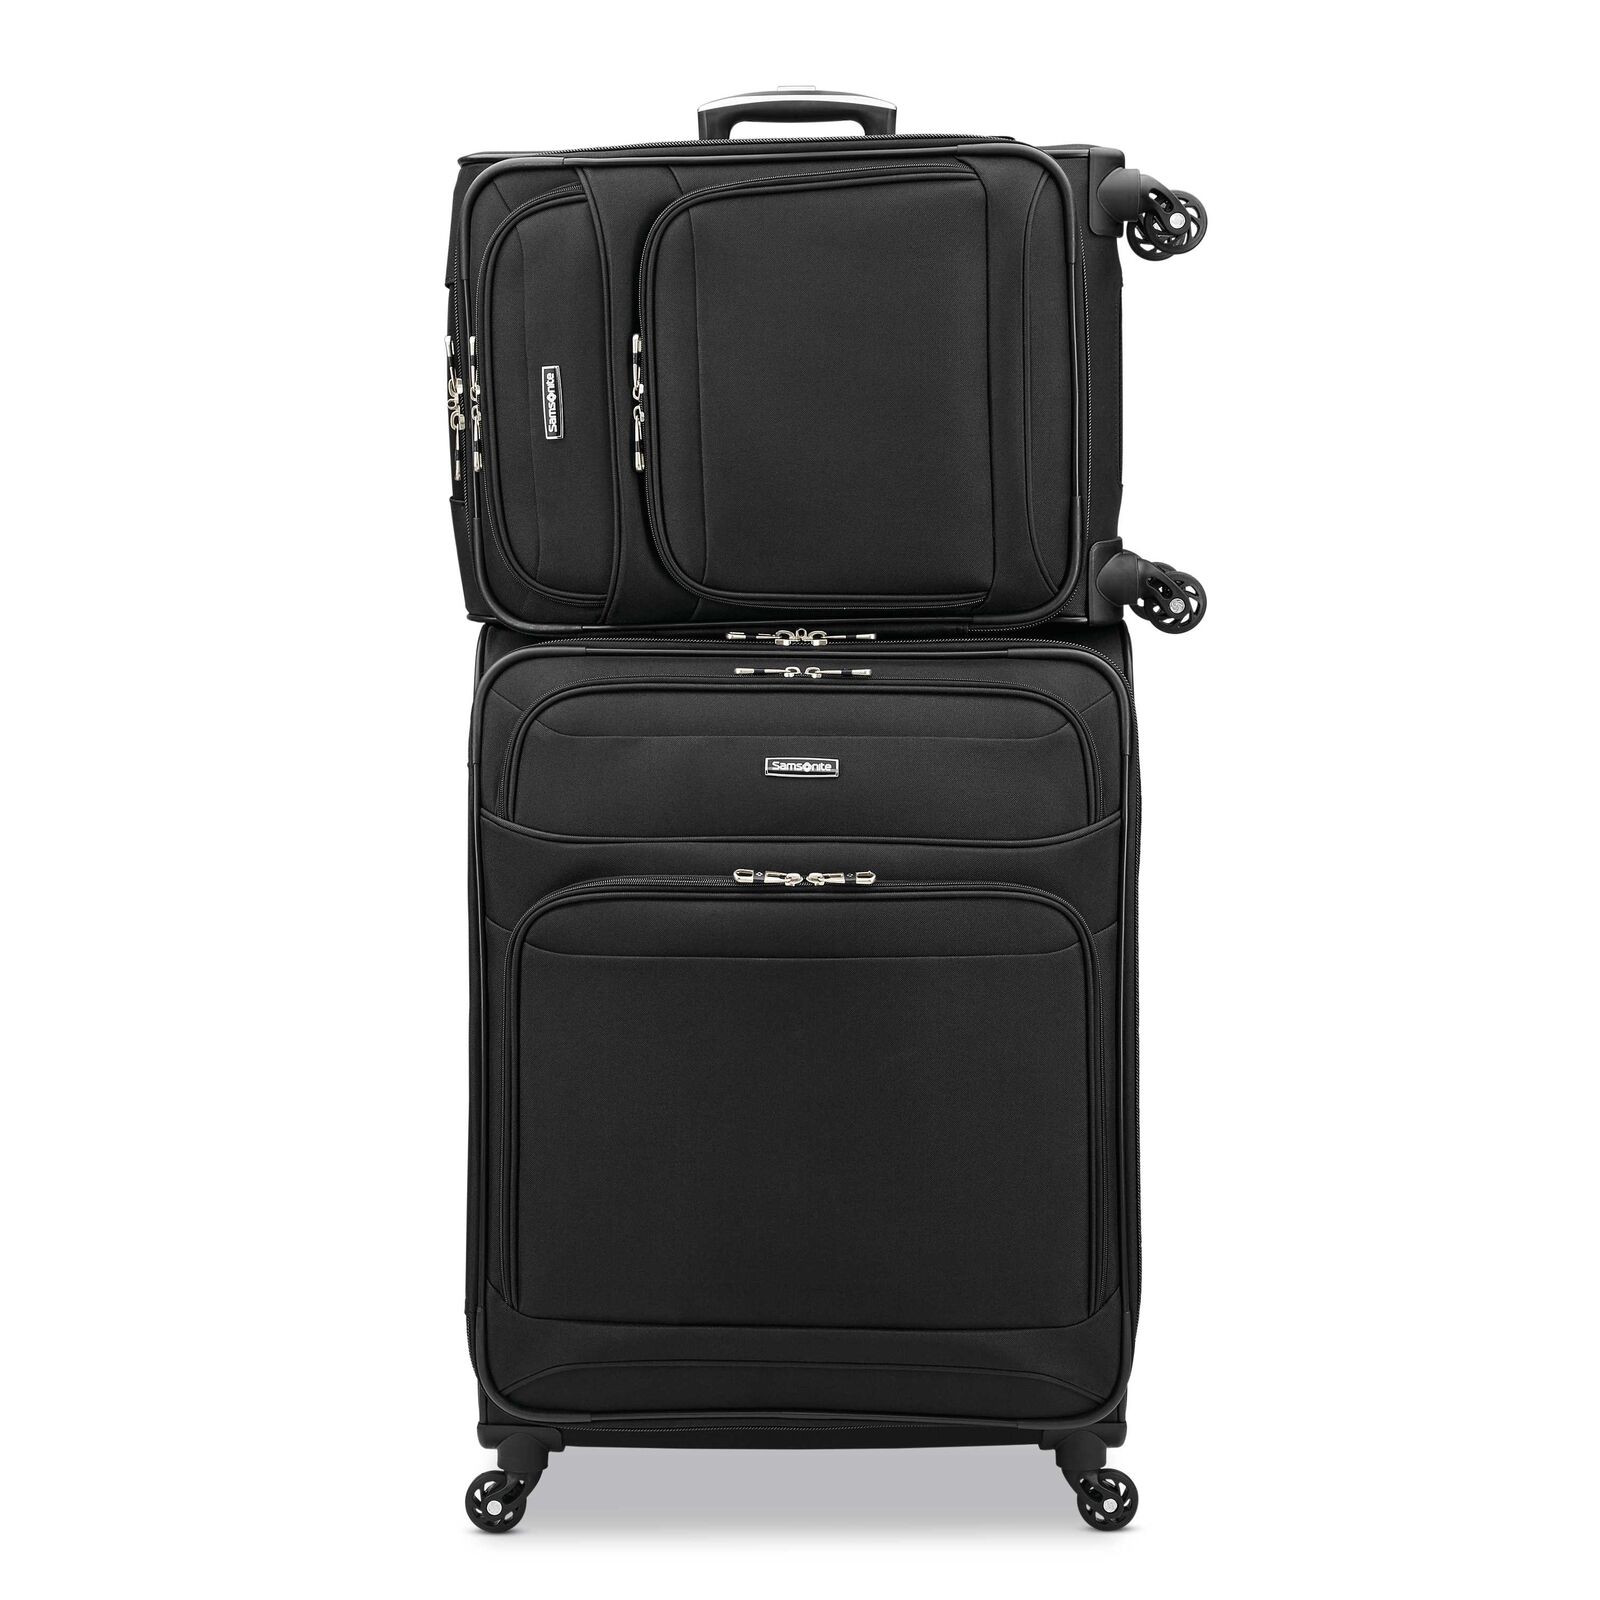 Samsonite StackItTM Plus 2 Piece Luggage Set